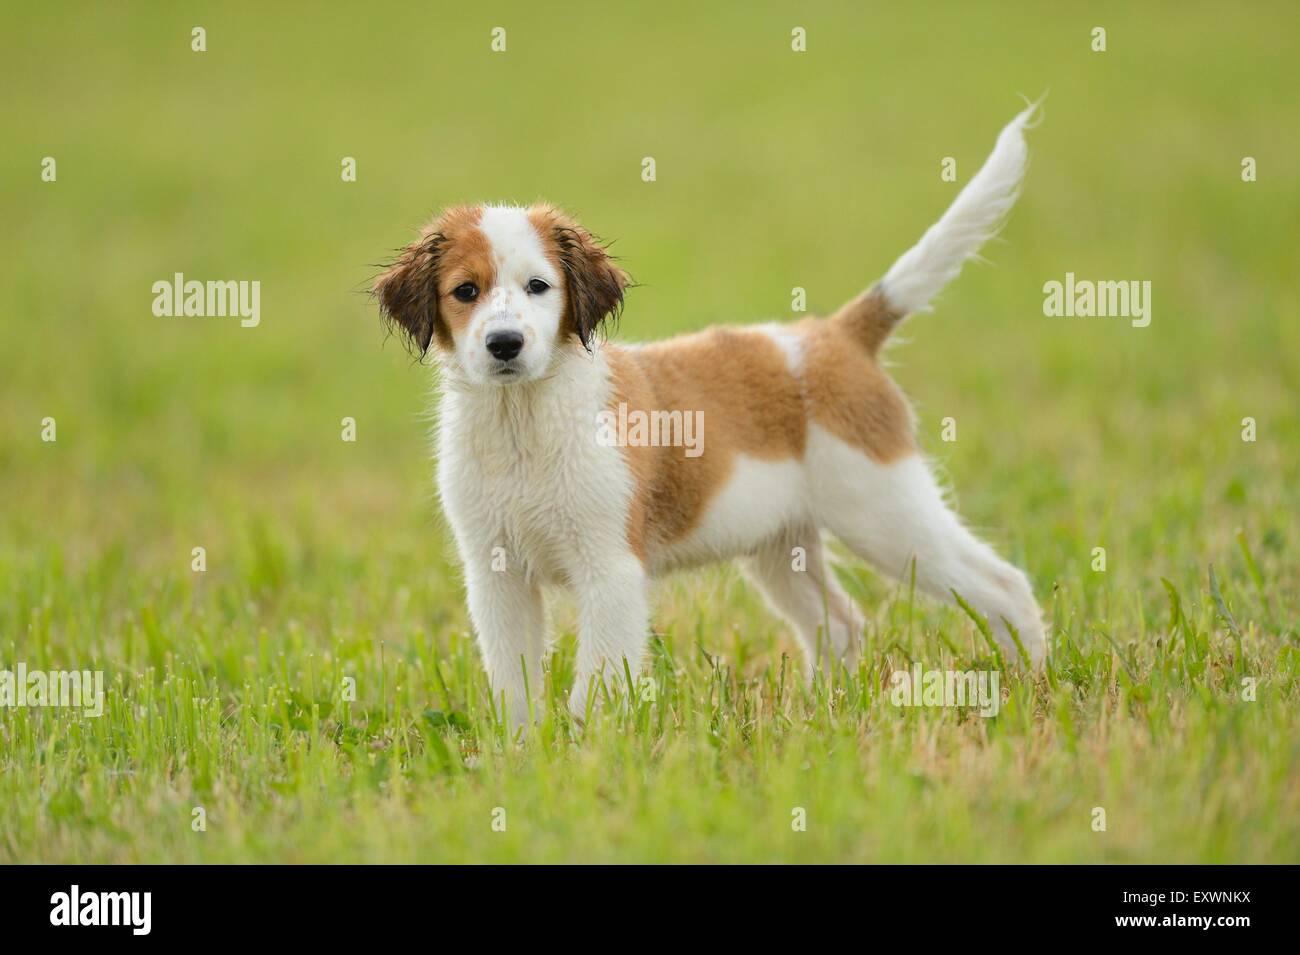 Kooikerhondje dog puppy standing on a meadow Stock Photo